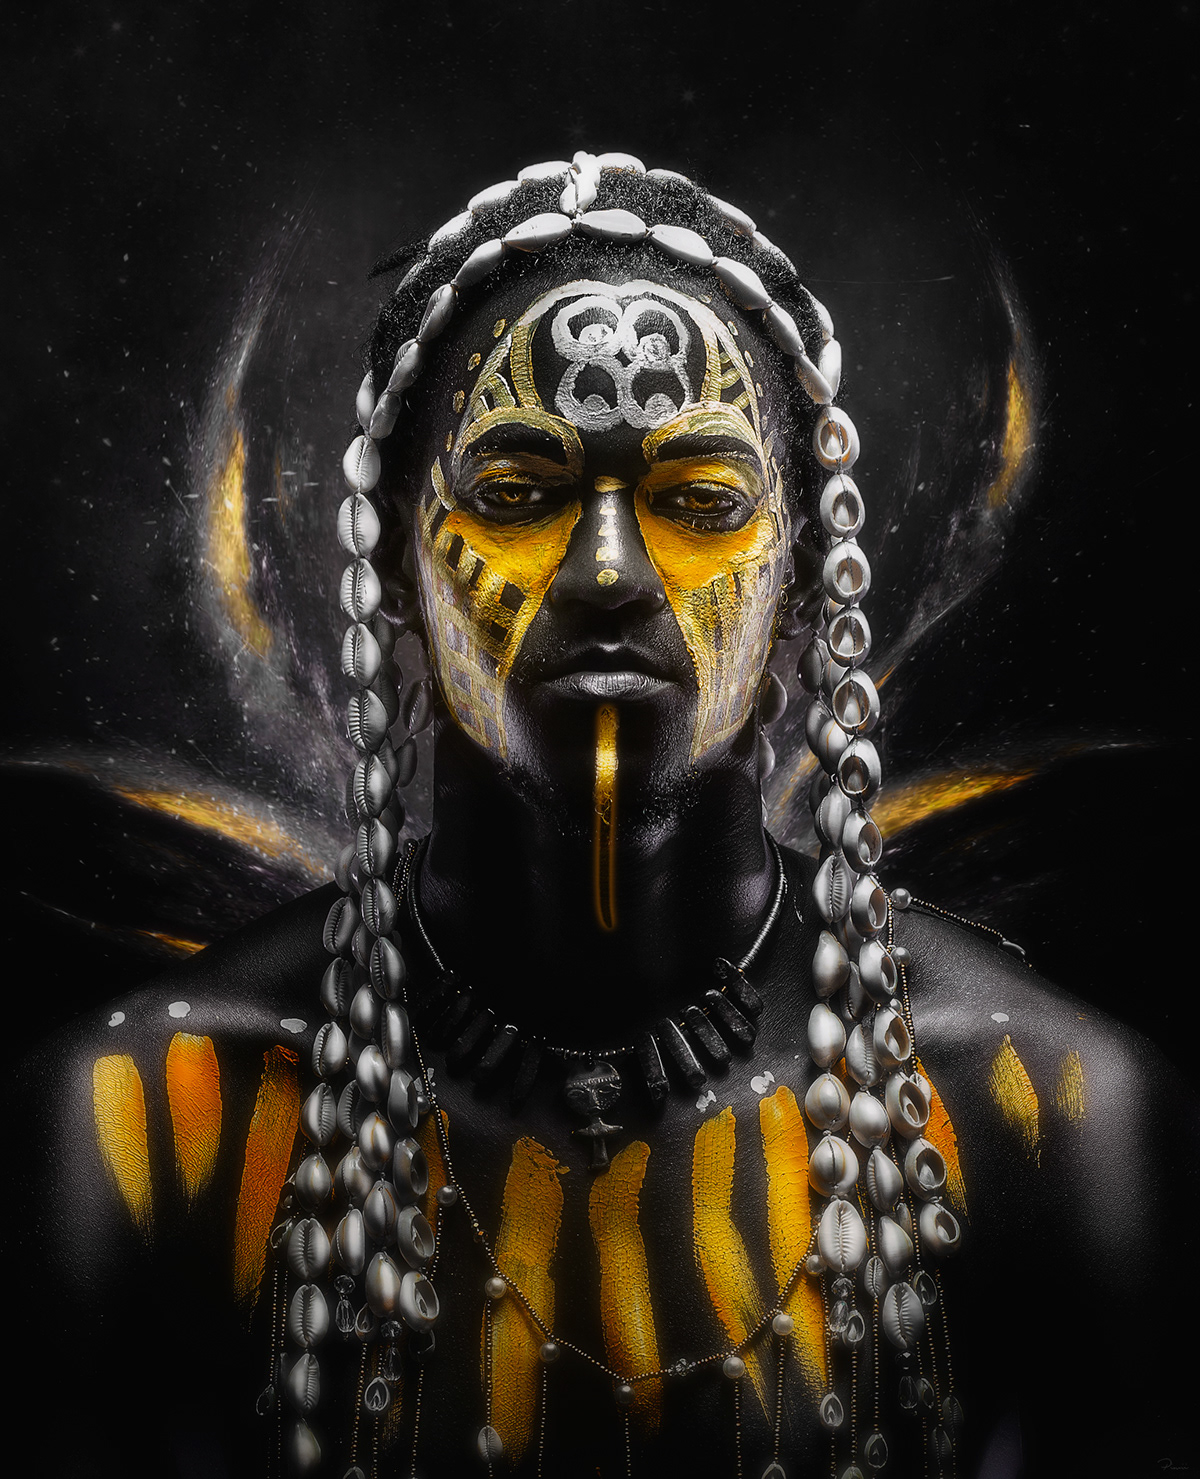 African Art afrique black culture galaxy Masque shaman